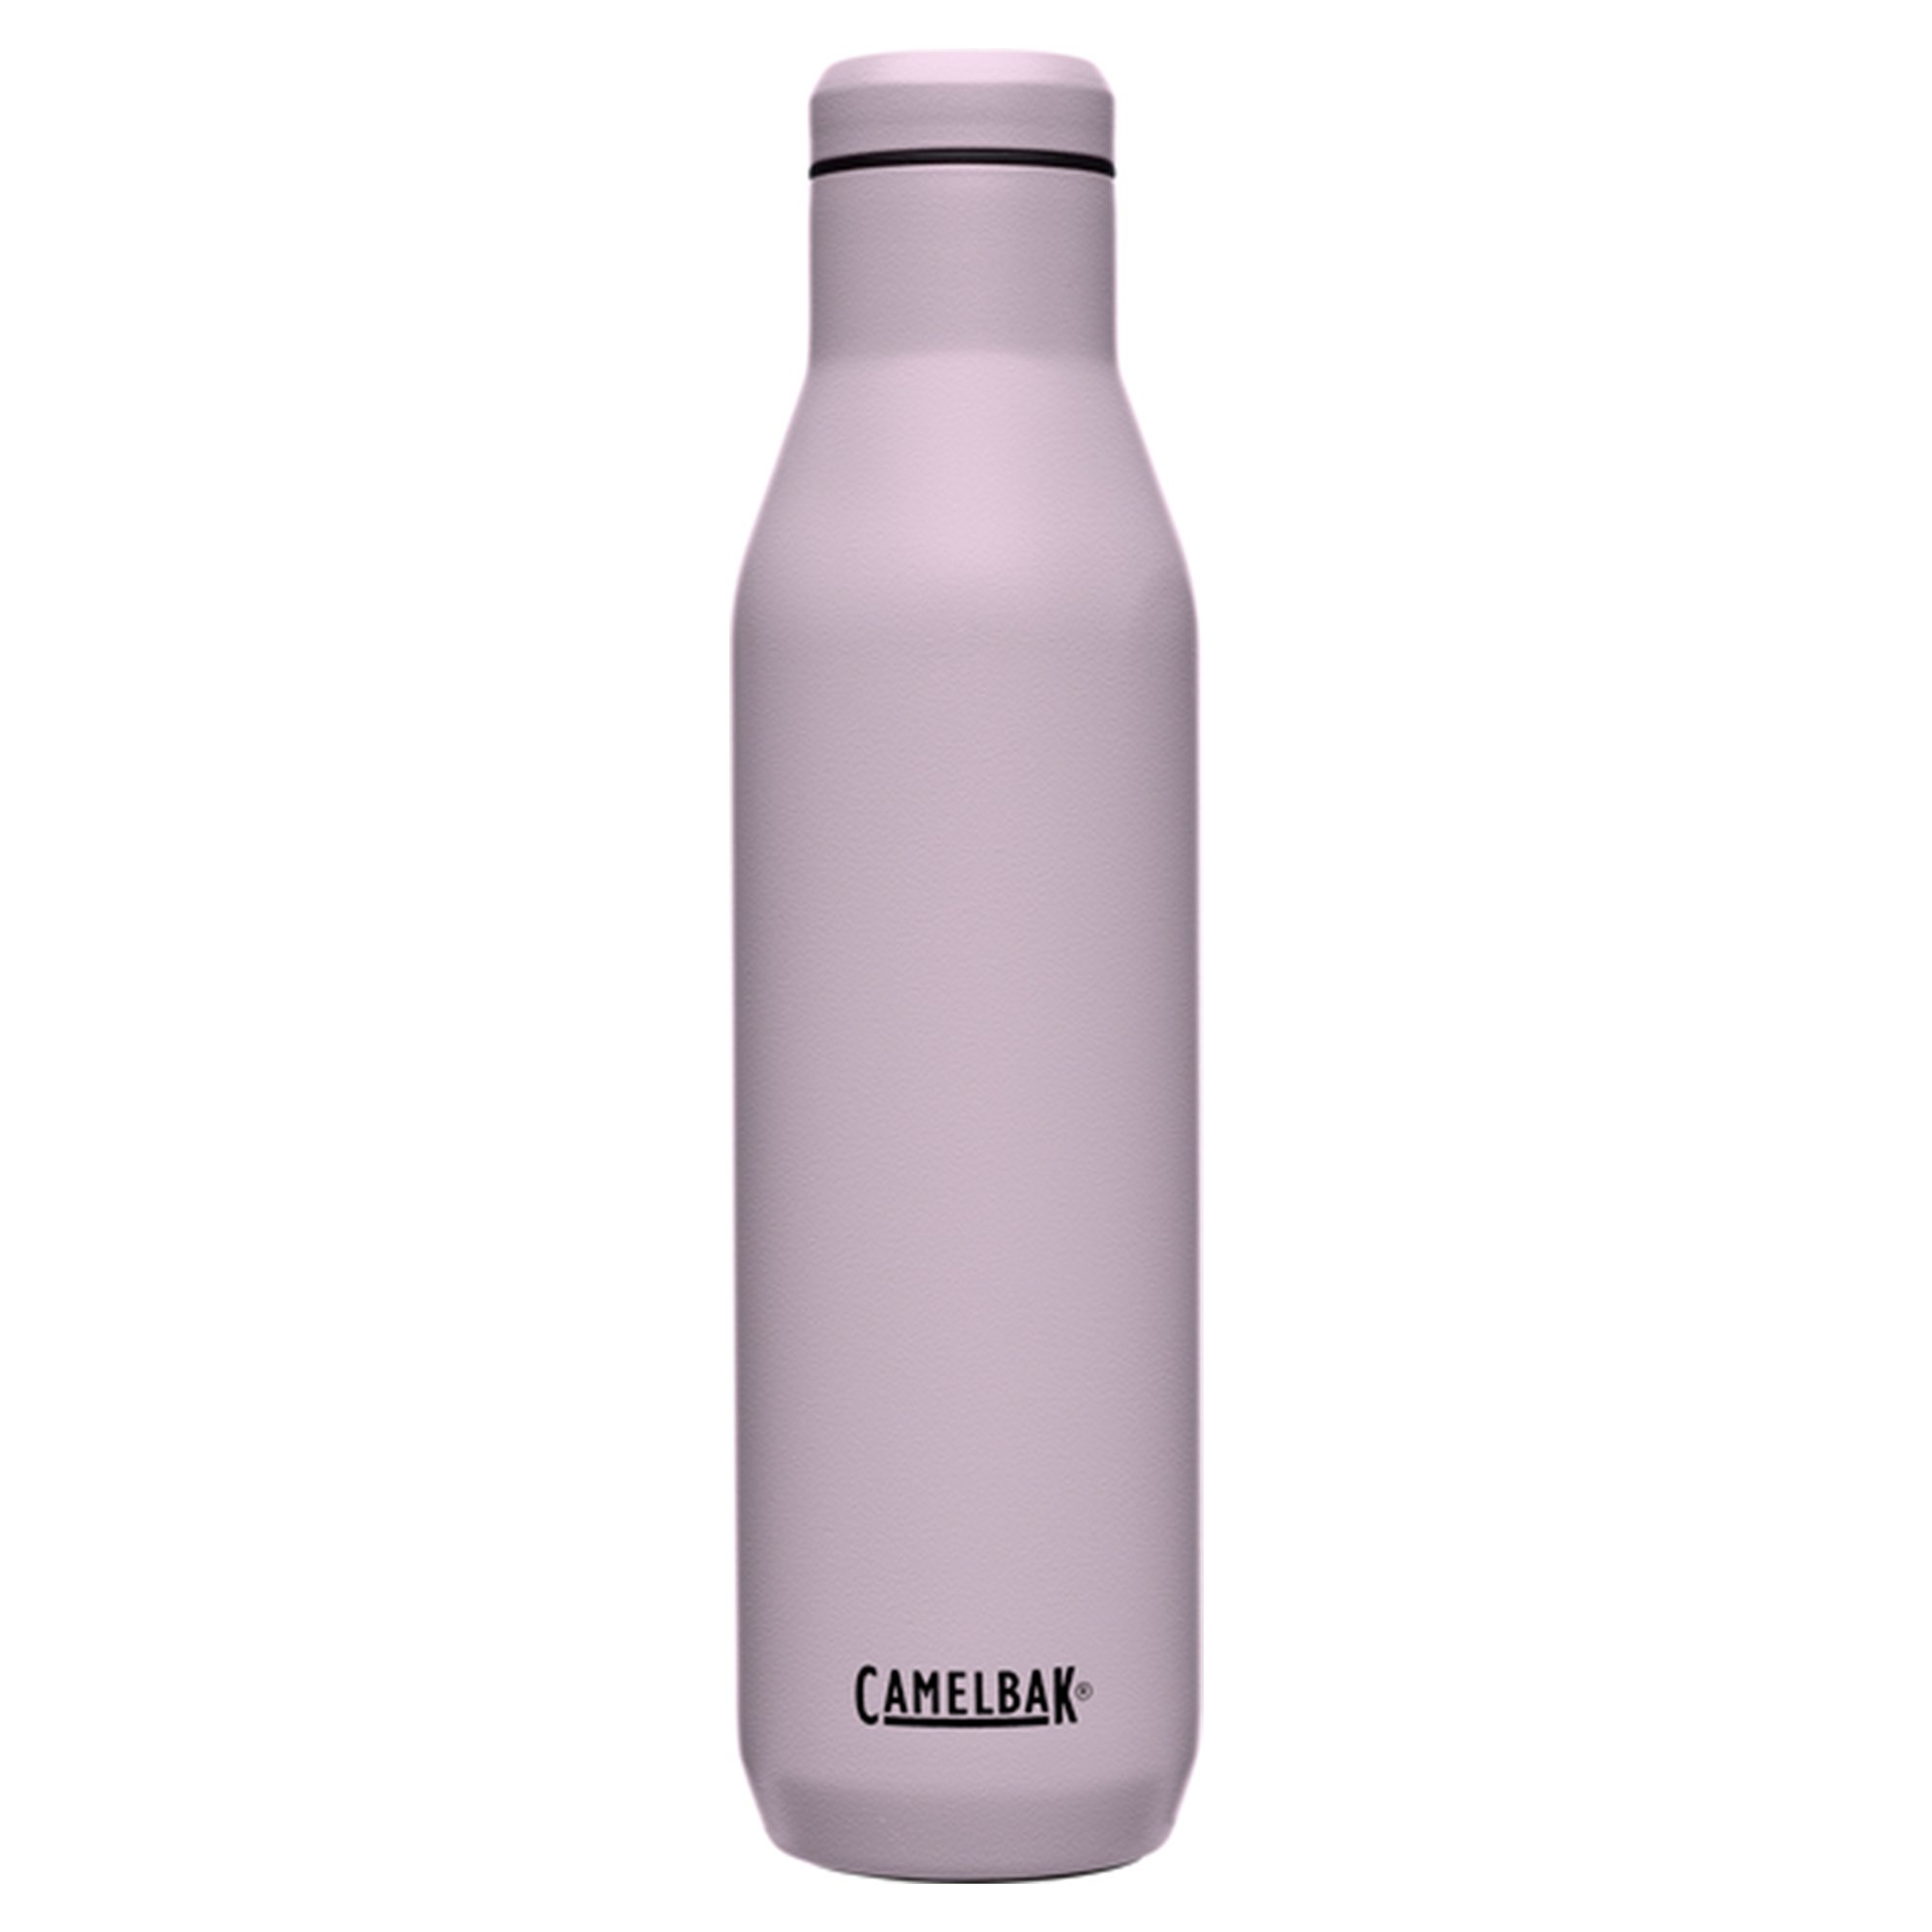 Camelbak Drikkeflaske 0,75 liter, purple sky